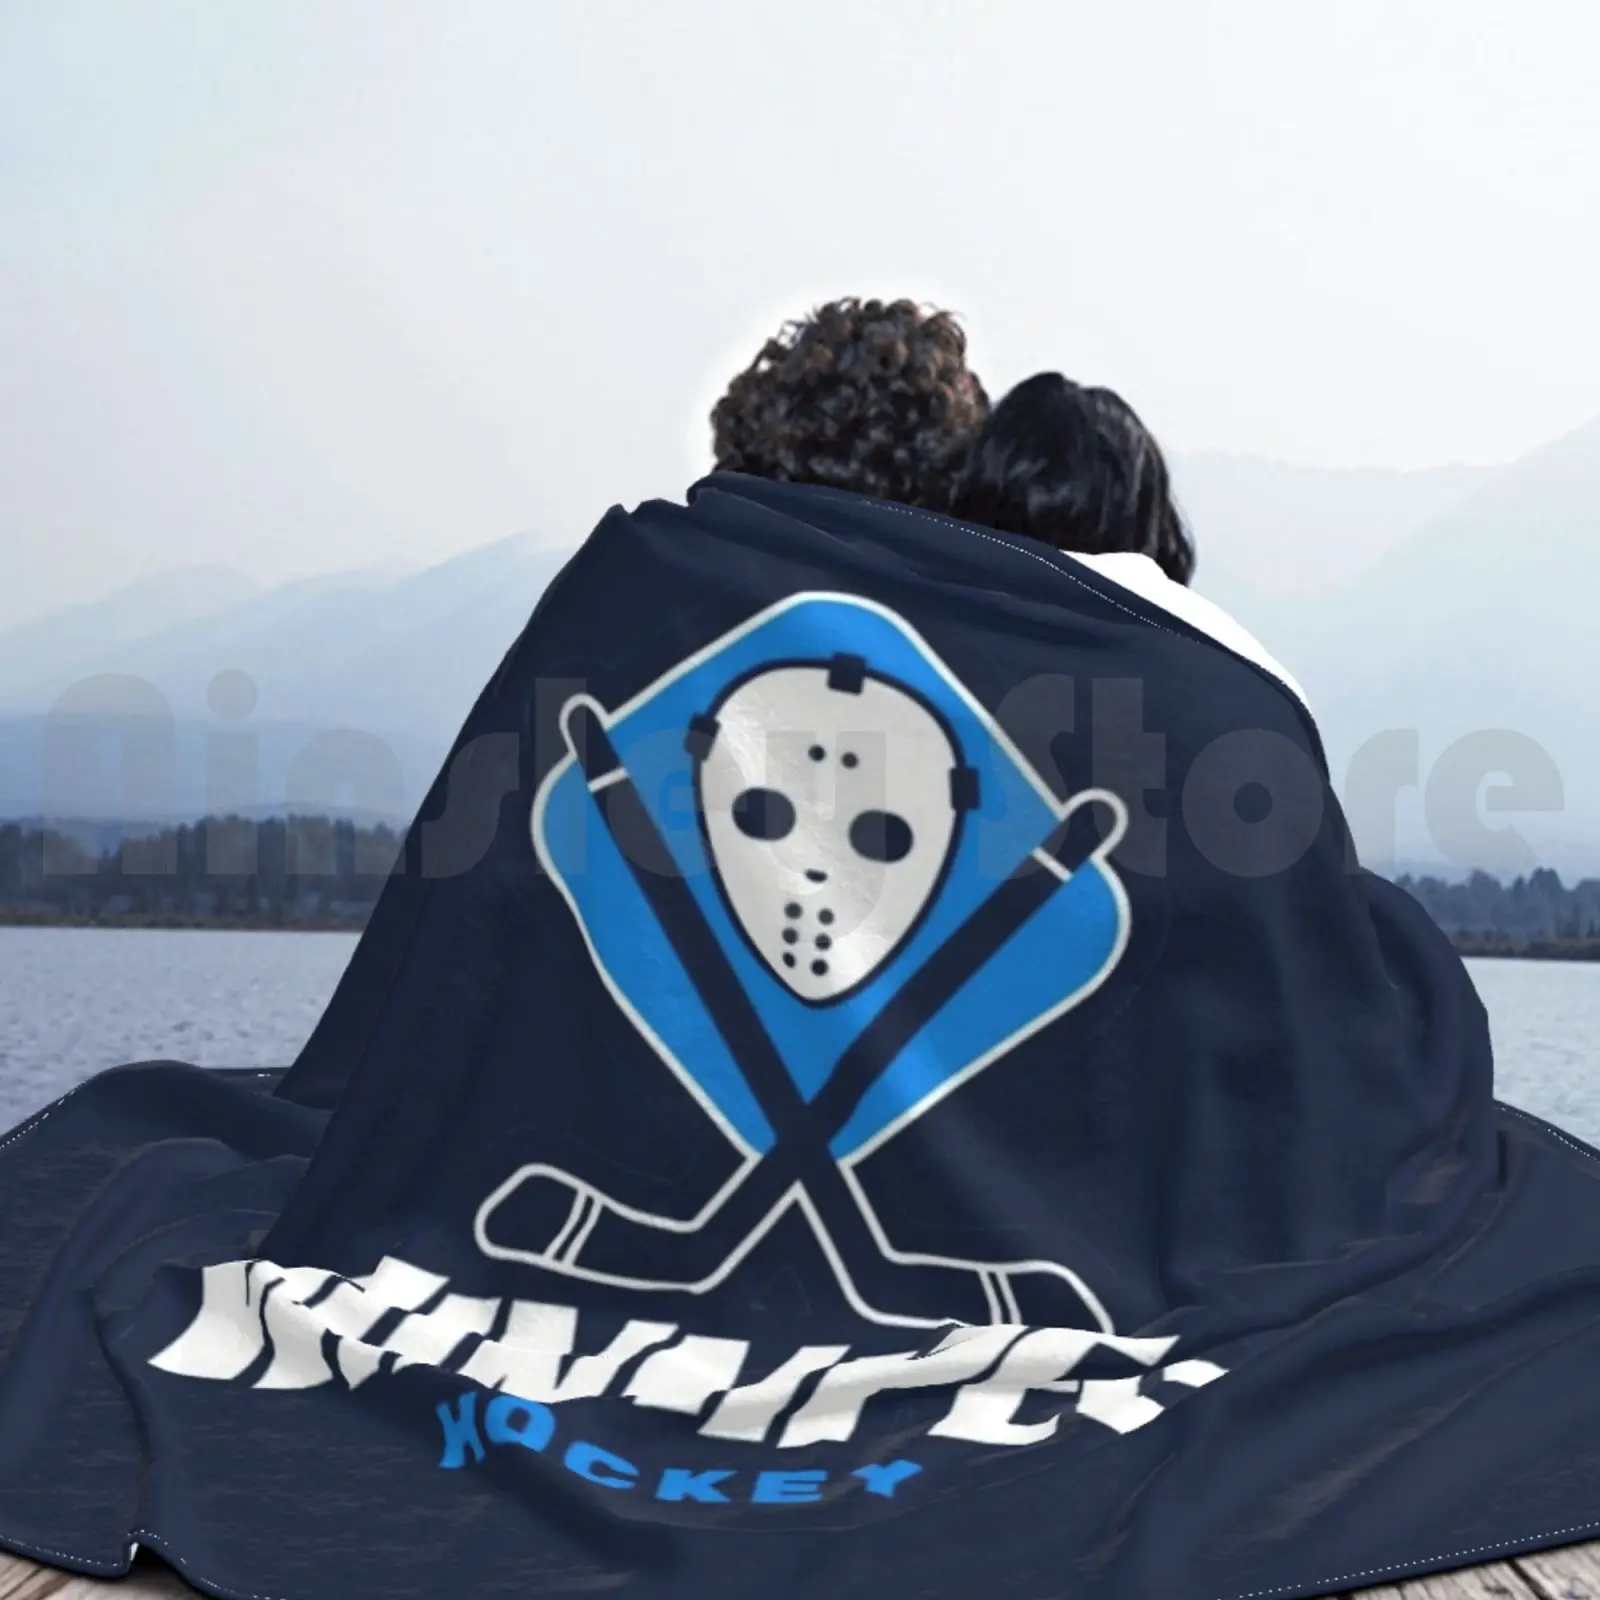 Хоккейное одеяло Fashion с нашивкой Winnipeg на льду и лого LNH Jets.